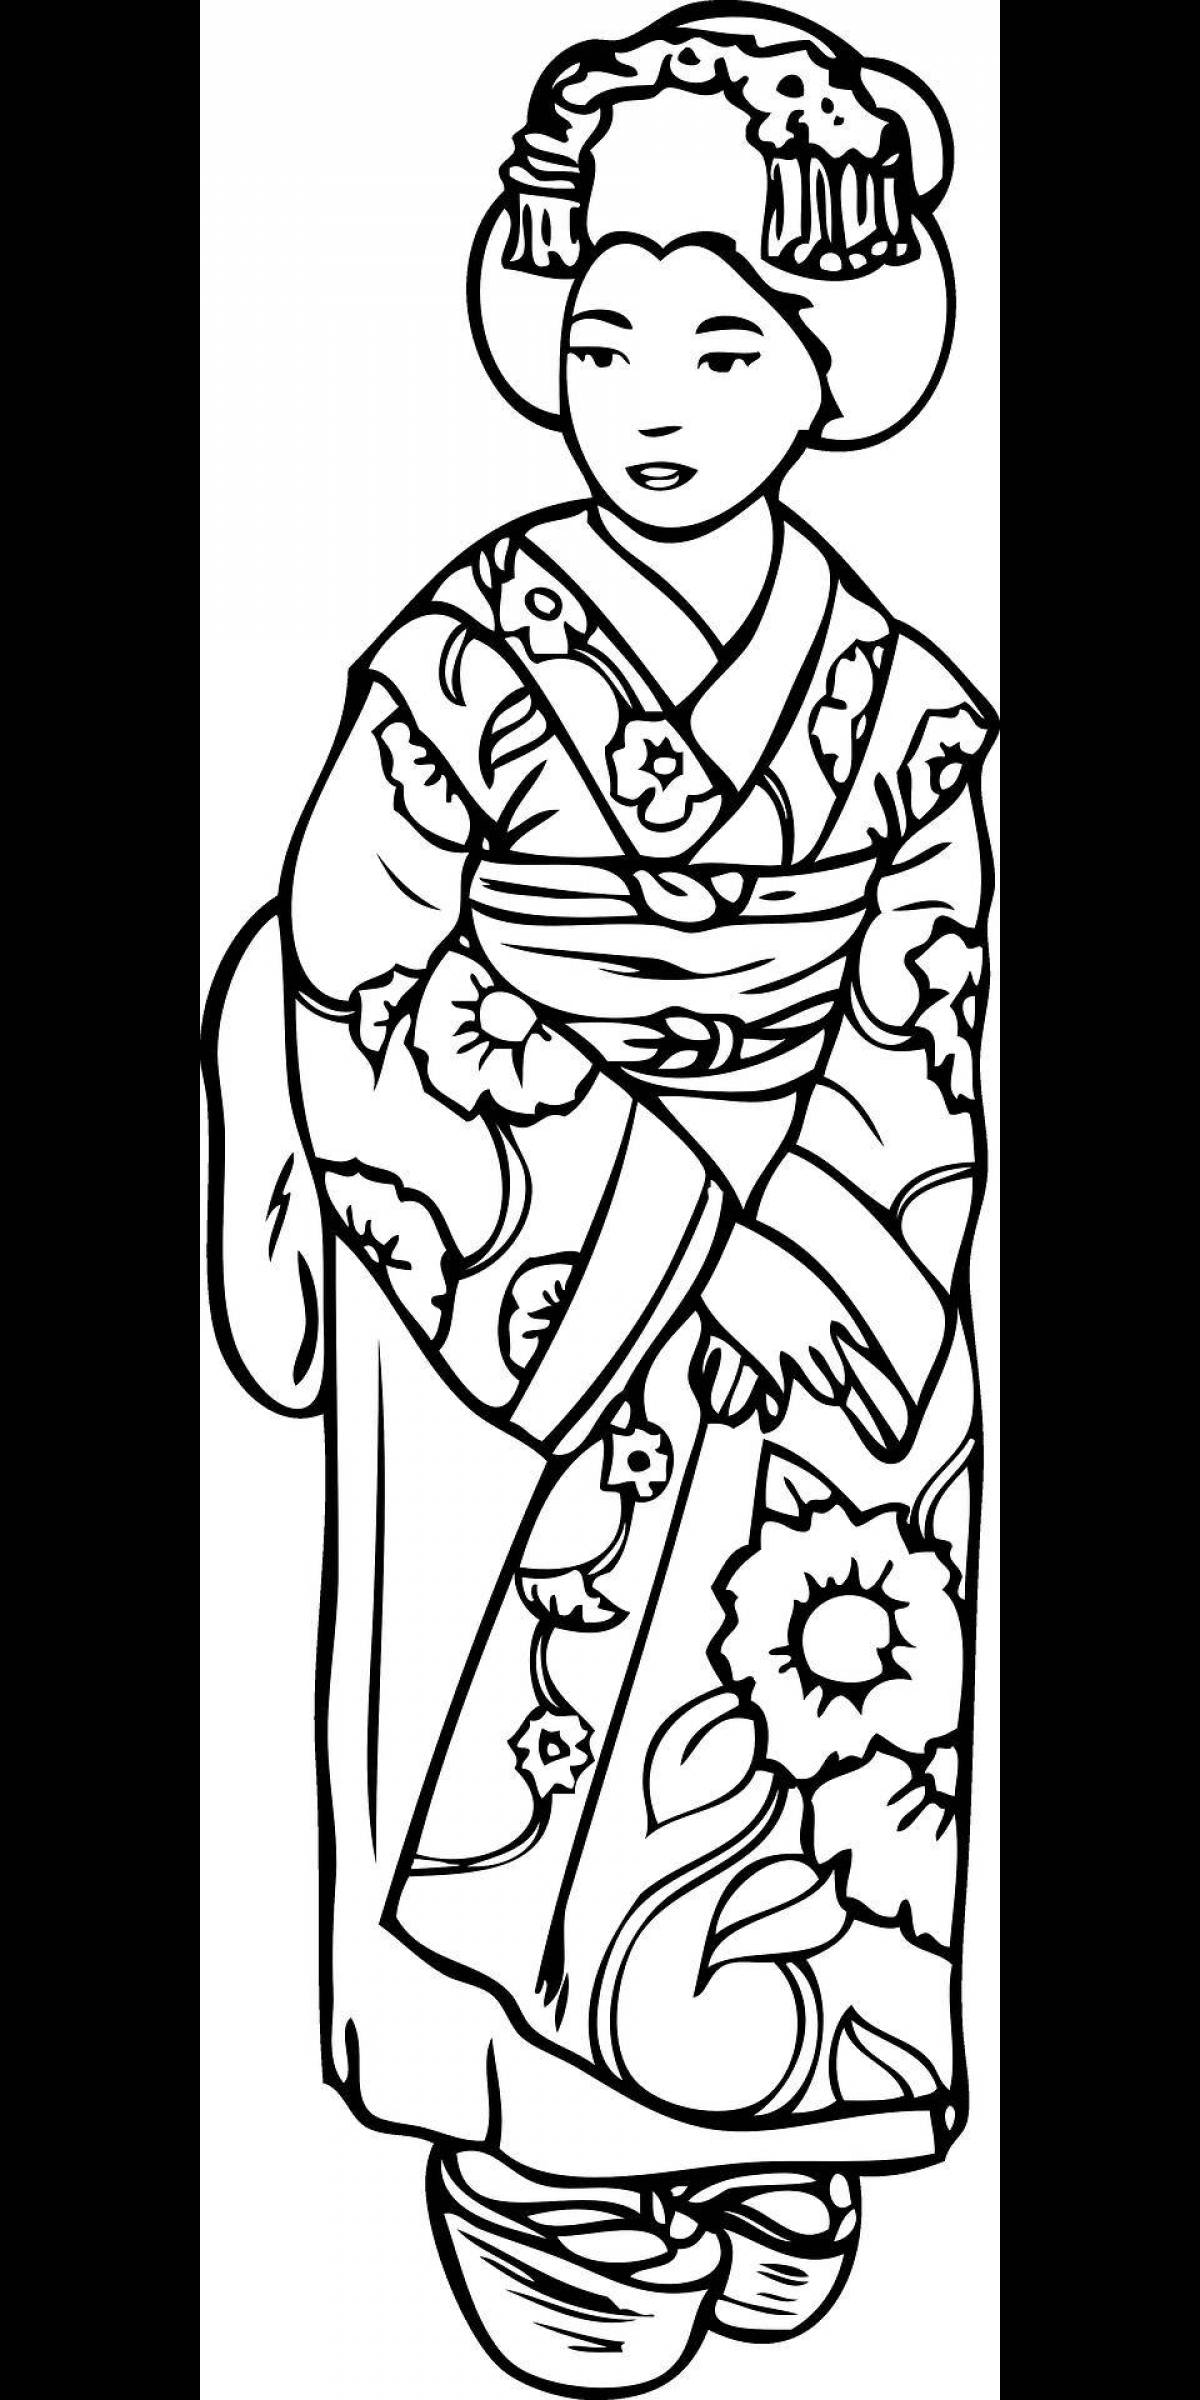 Colorful Japanese woman in kimono